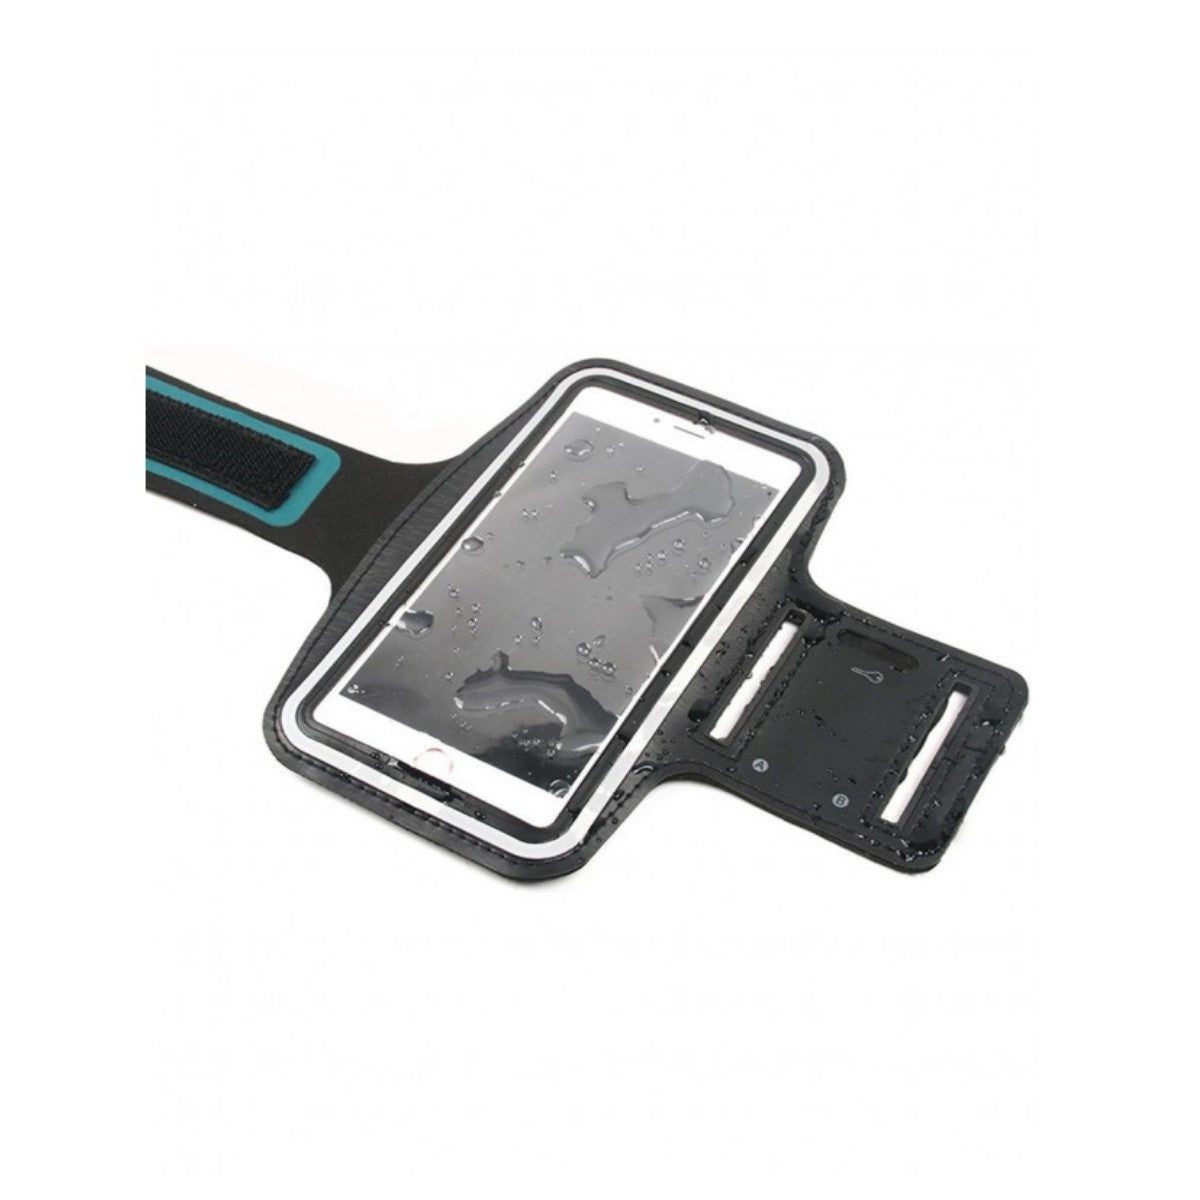 Sportarmband für Xiaomi 13 Ultra Sport Fitness Hülle Armband Handy Laufhülle